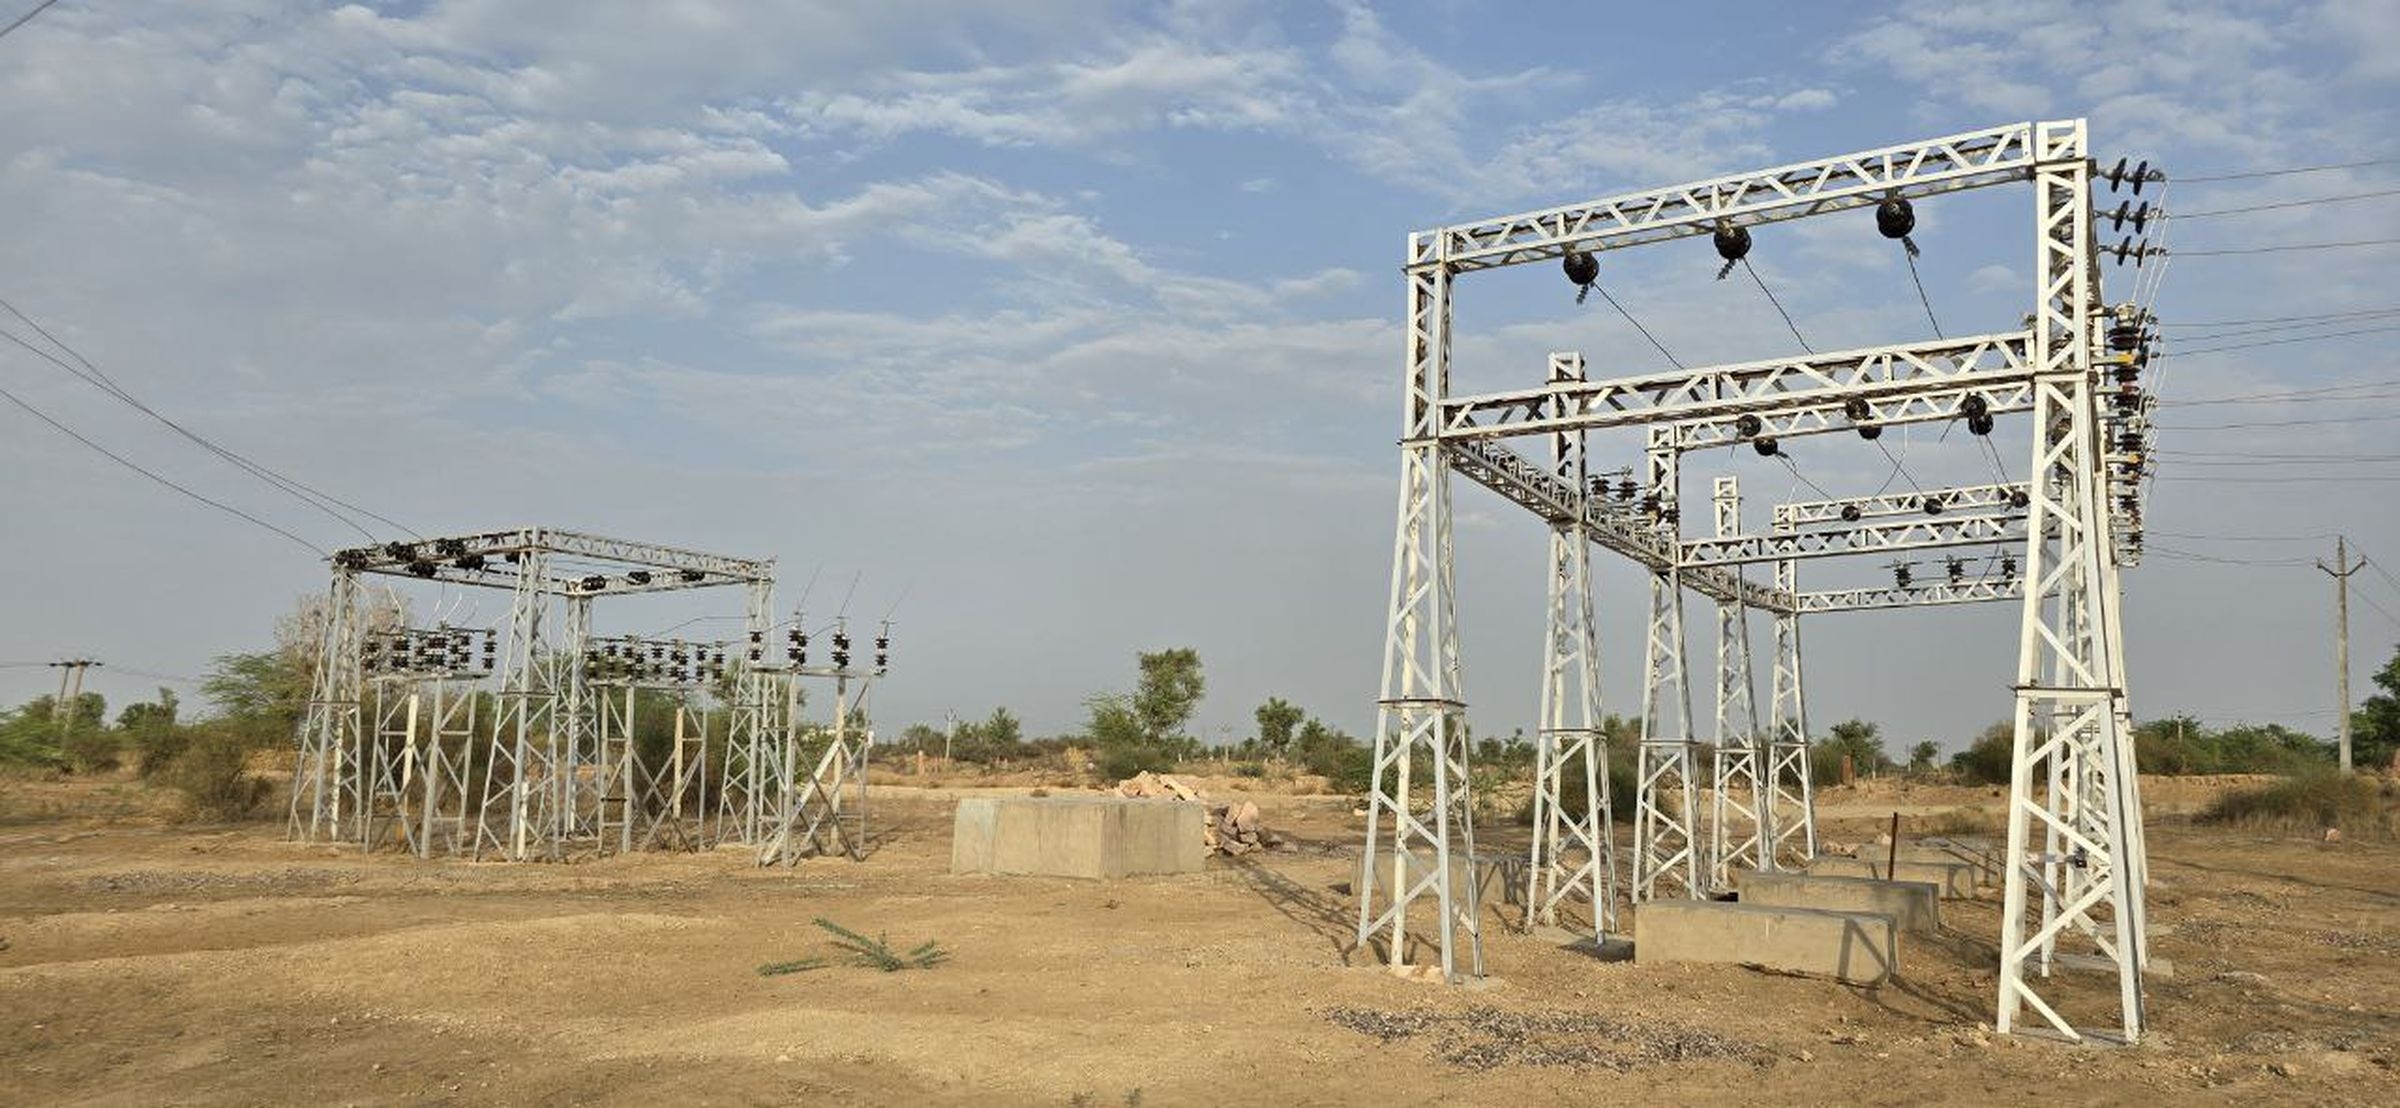 Village Electricity Crisis Continues